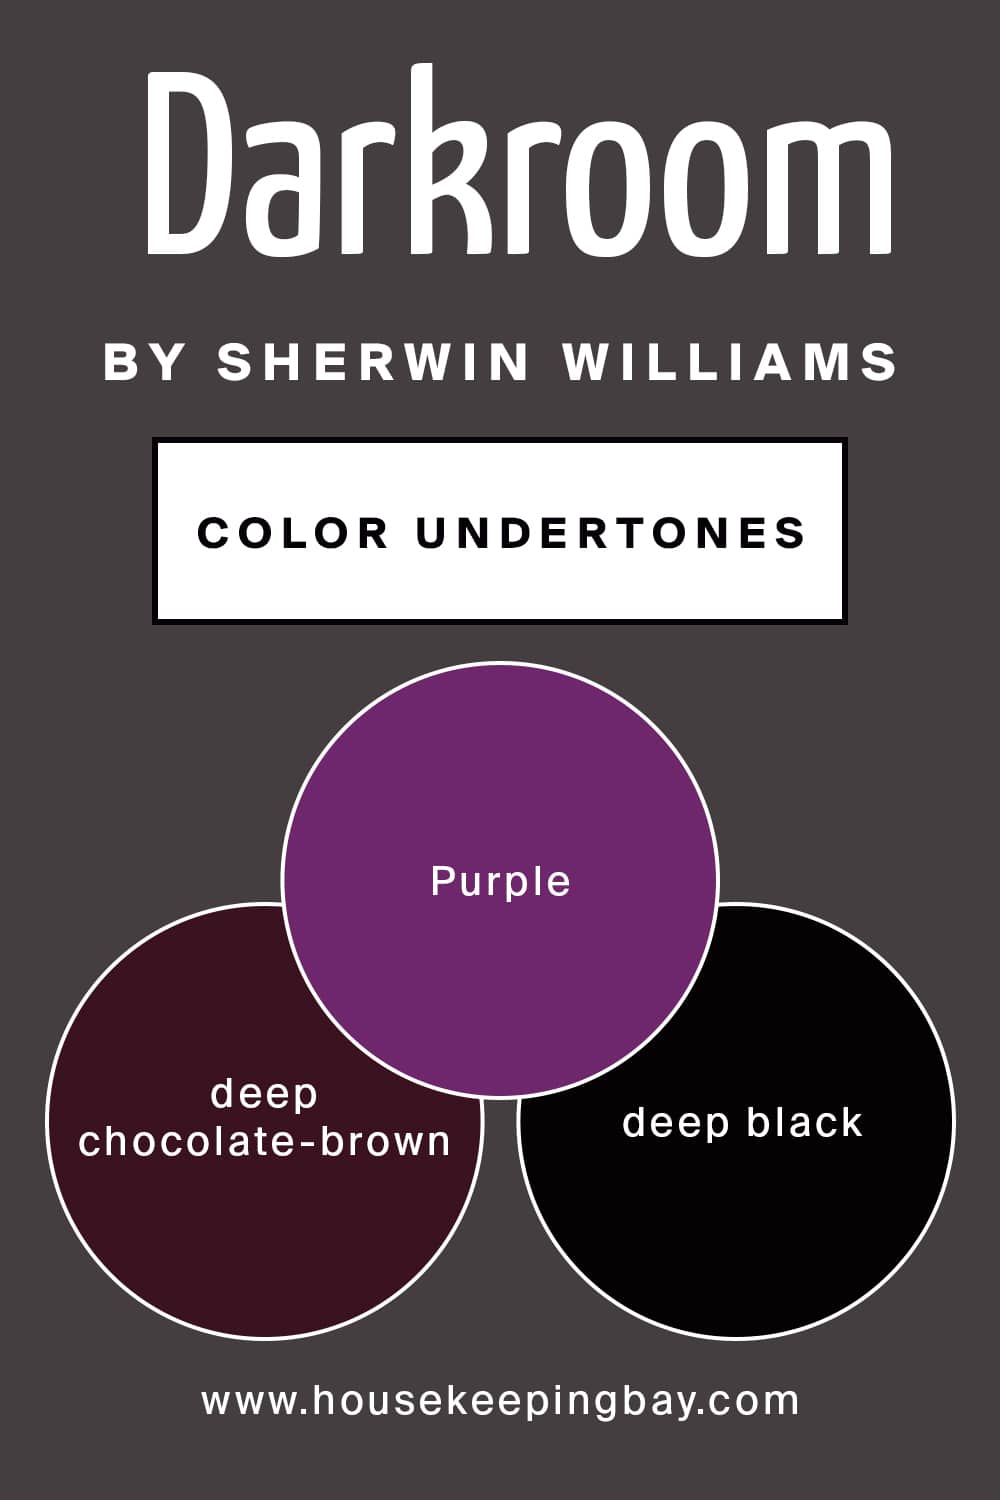 Darkroom by Sherwin Williams Color Undertones